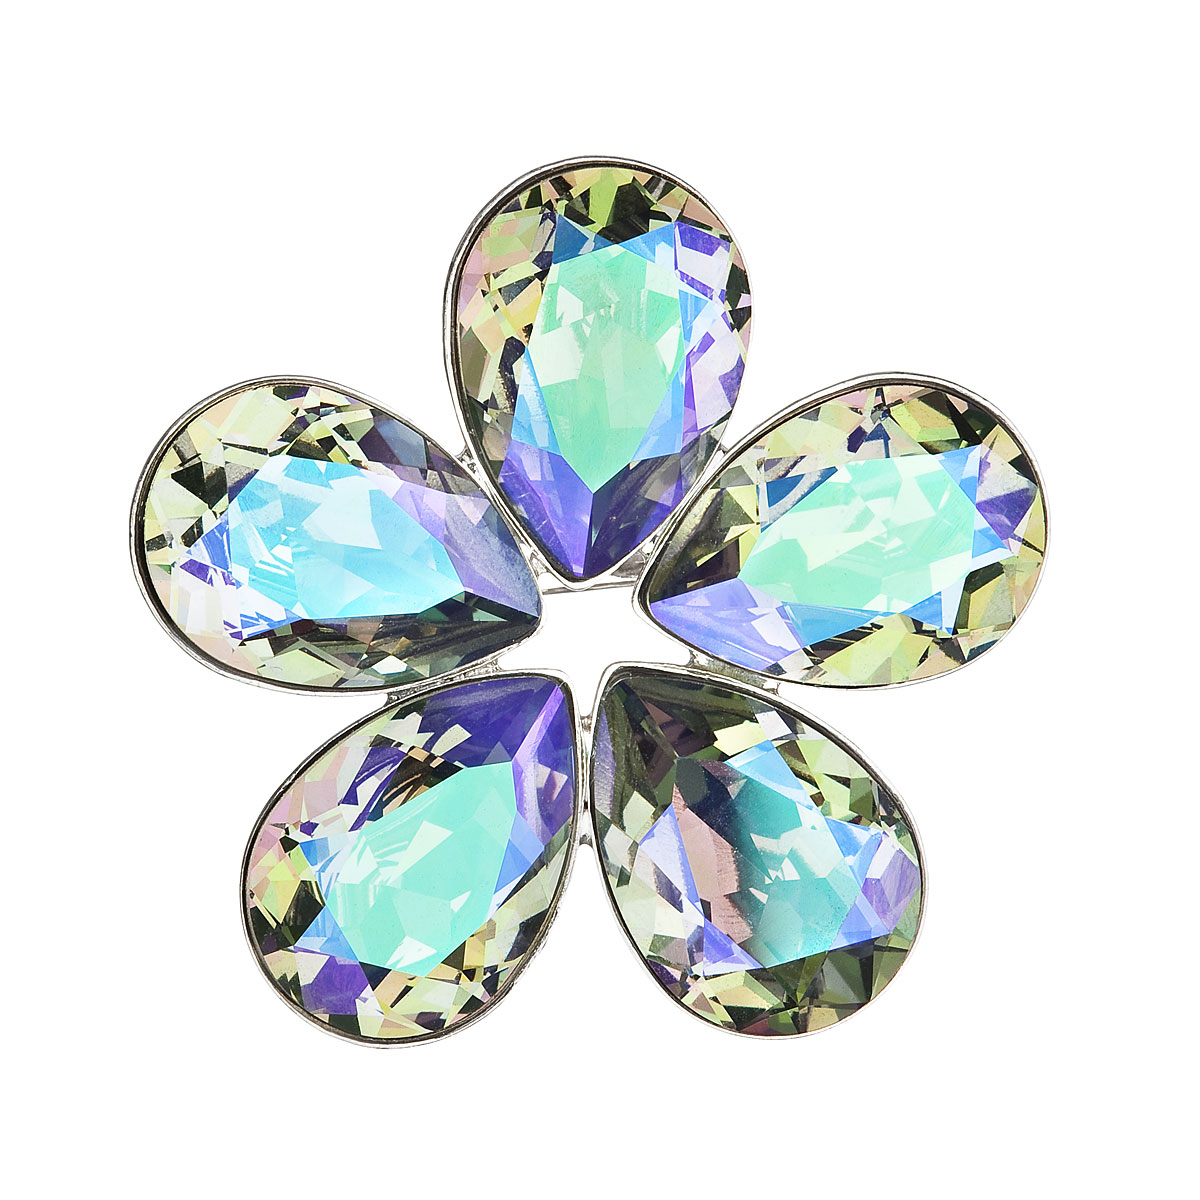 Evolution Group Brož bižuterie se Swarovski krystaly zelená fialová kytička 58003.5 paradise shine